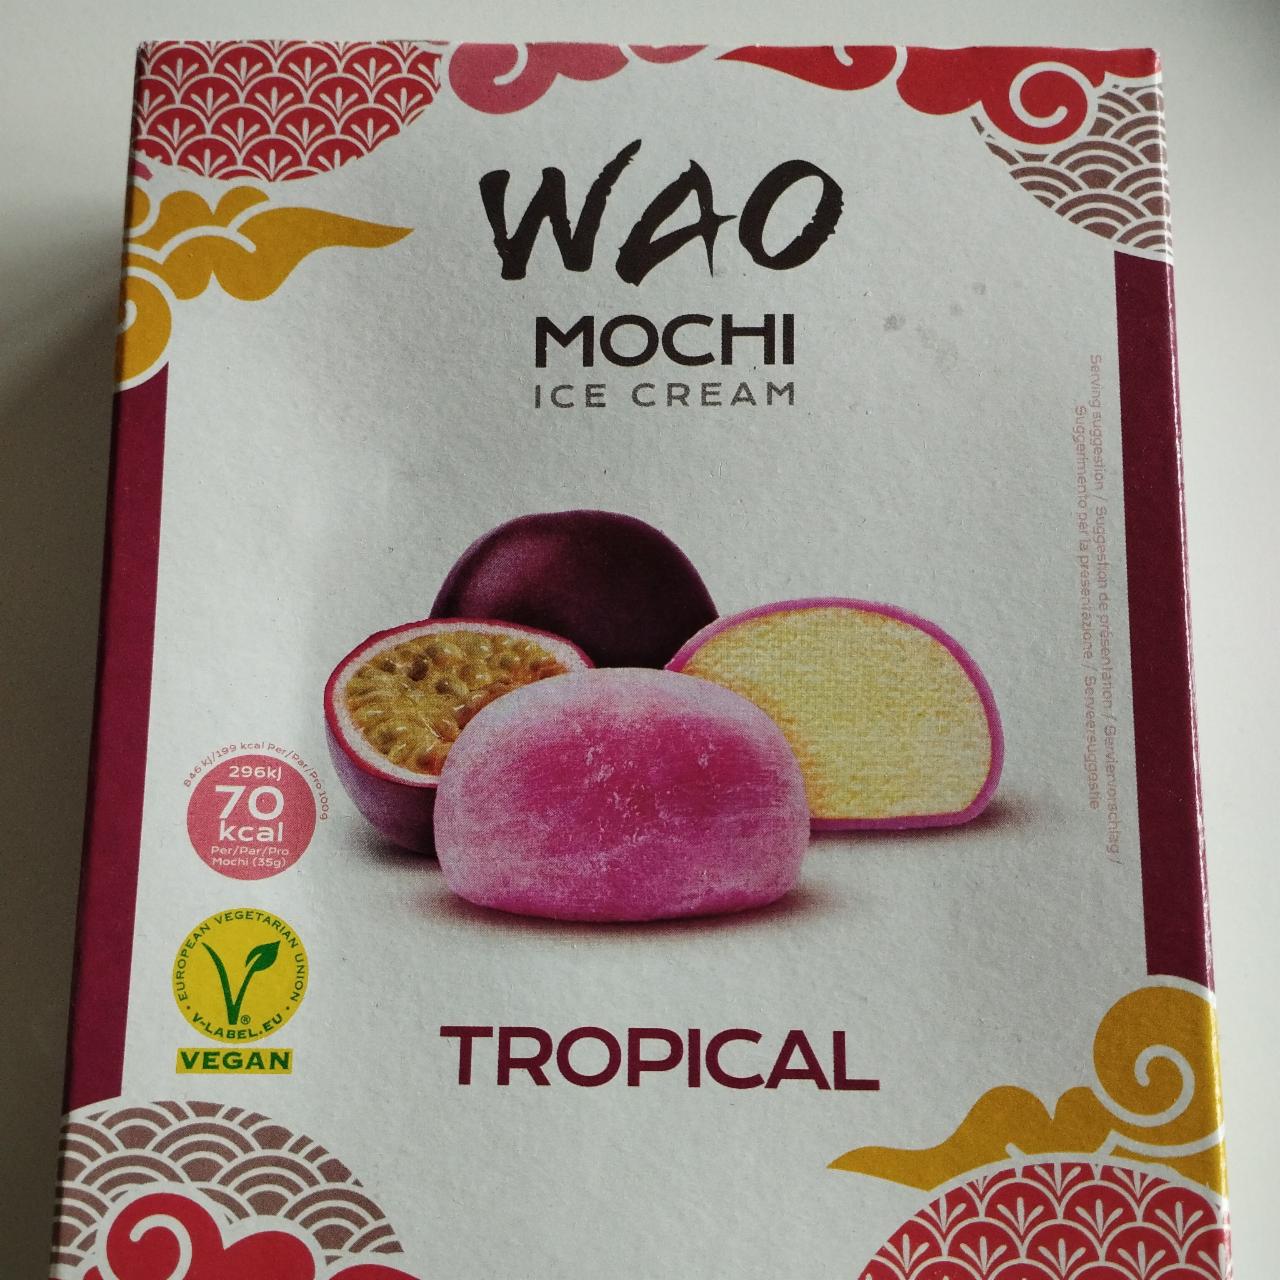 Fotografie - Mochi Ice Cream Tropical Wao